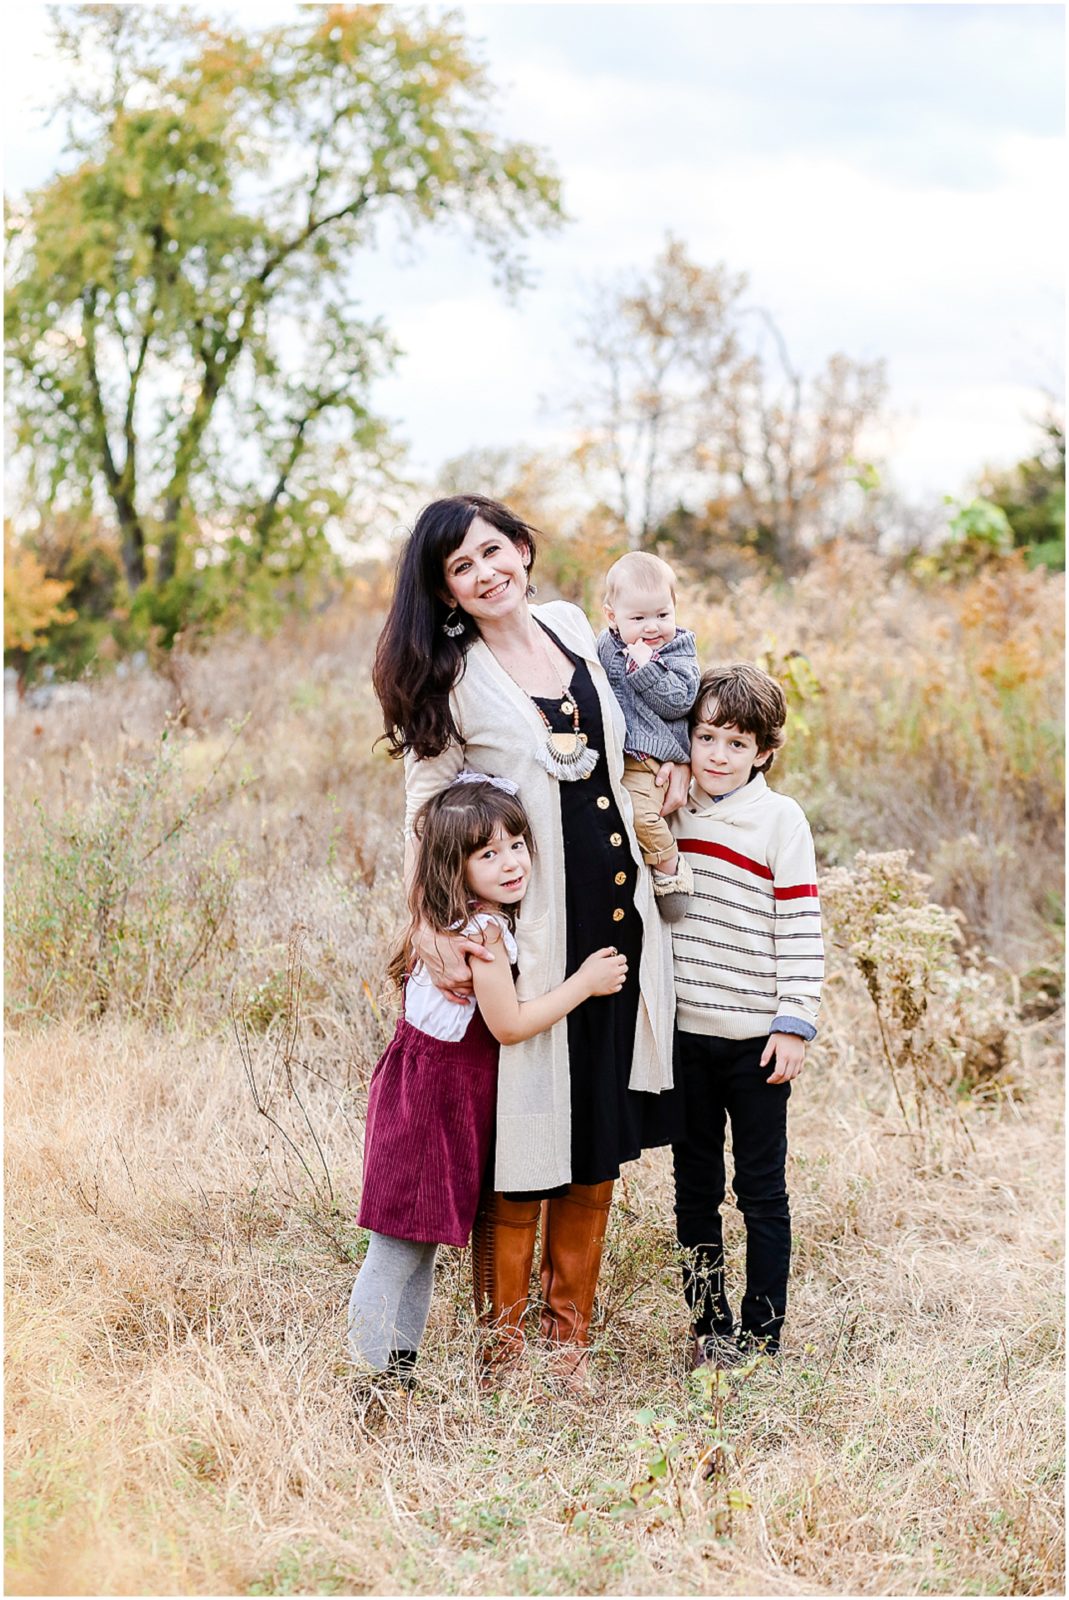 Family Portraits at Shawnee Mission Park | Family Portrait Photographer based in Overland Park | Kansas City Wedding & Portrait Photography